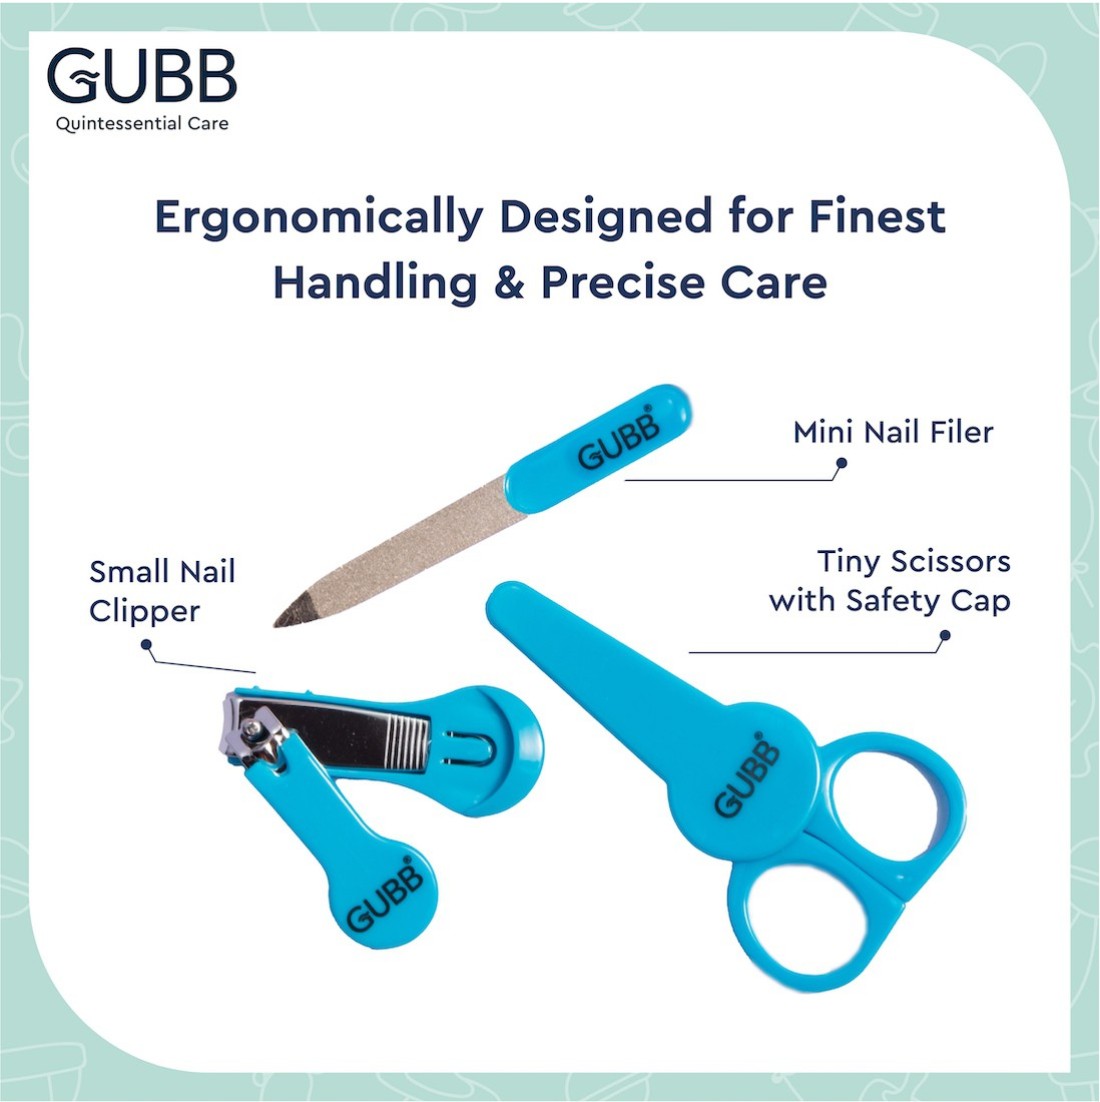 GUBB Nail Care Kit - Toe Nail Clipper, Finger Nail Cutter, Nail Filer &  Flat Tweezer |